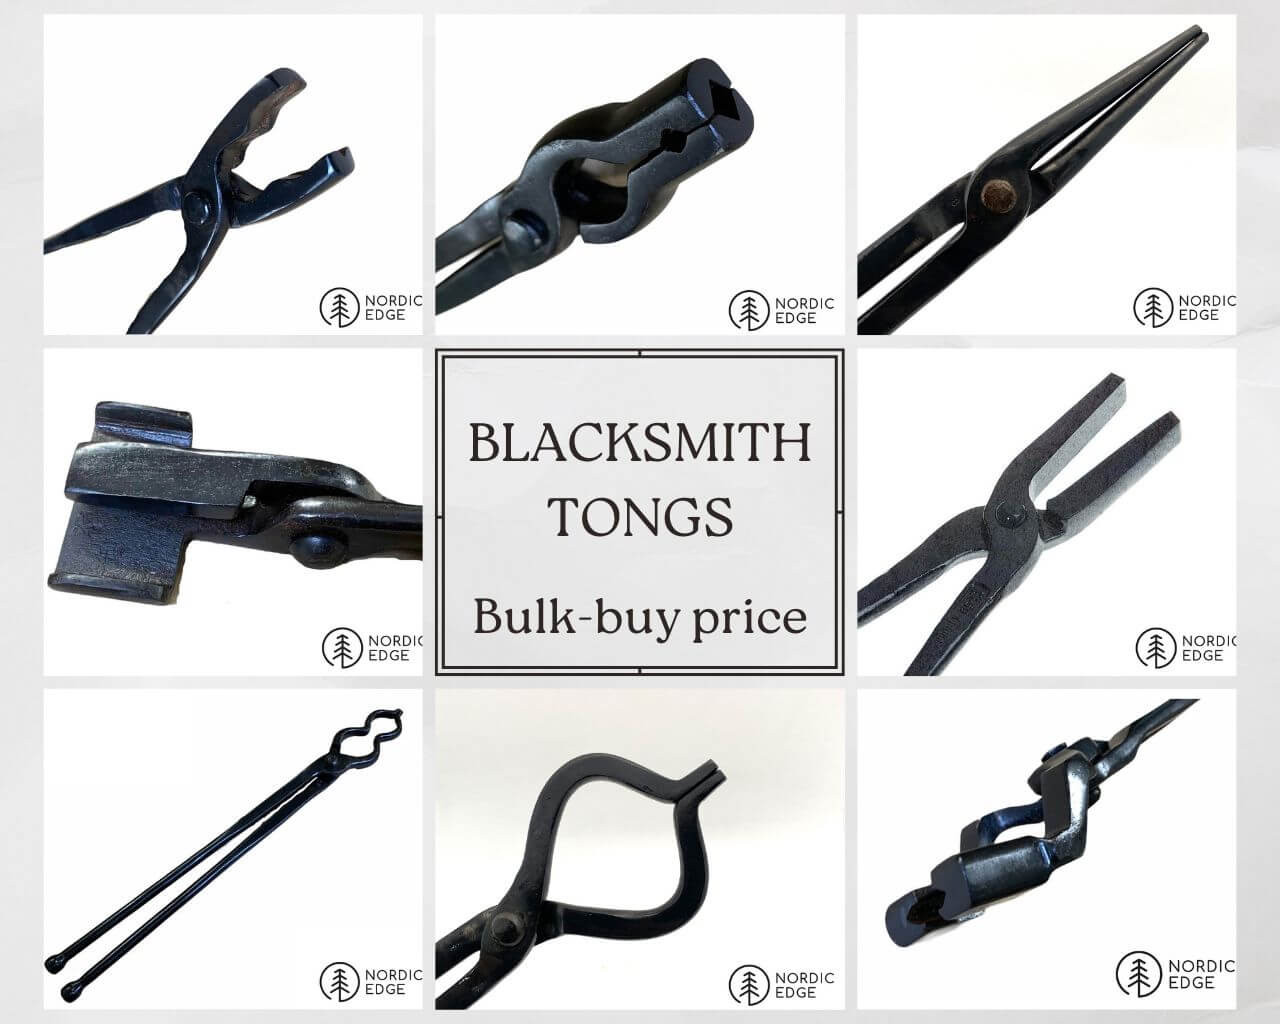 Blacksmith Tongs Forging Metal Working Tong Set. V-bit Tongs and